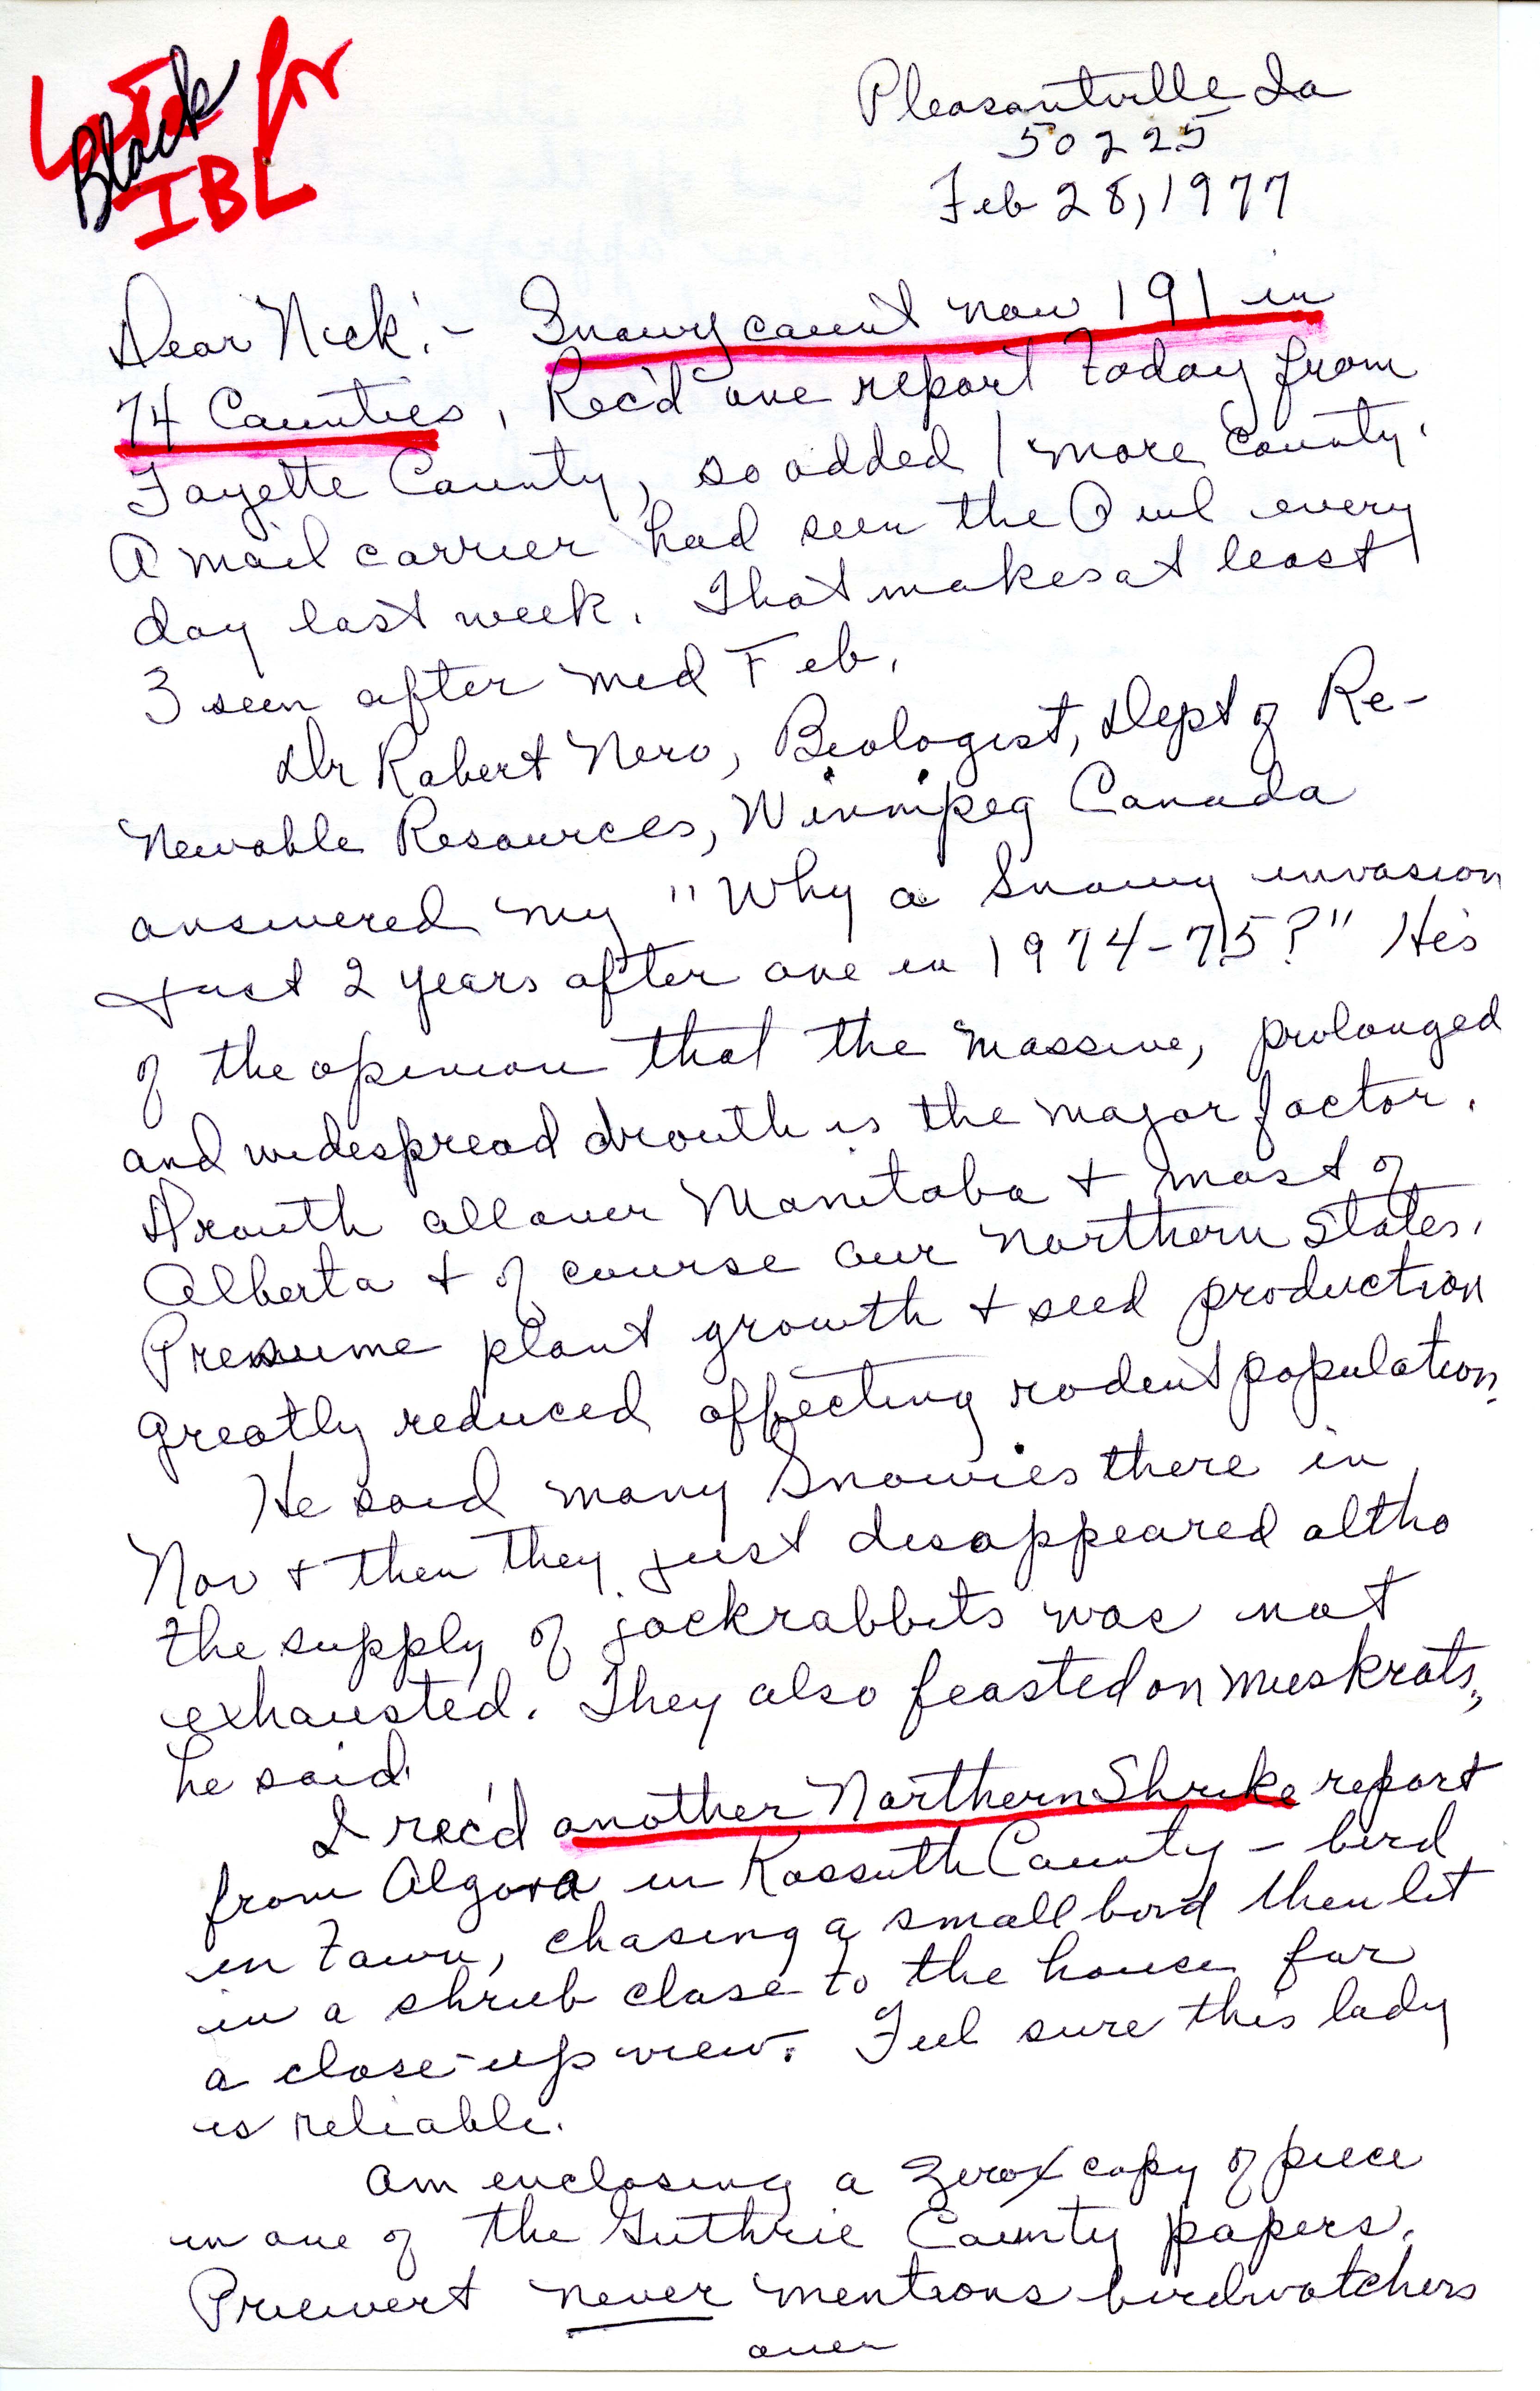 Gladys Black letter to Nicholas S. Halmi regarding bird counts of Snowy Owl and Northern Shrike, February 28, 1977